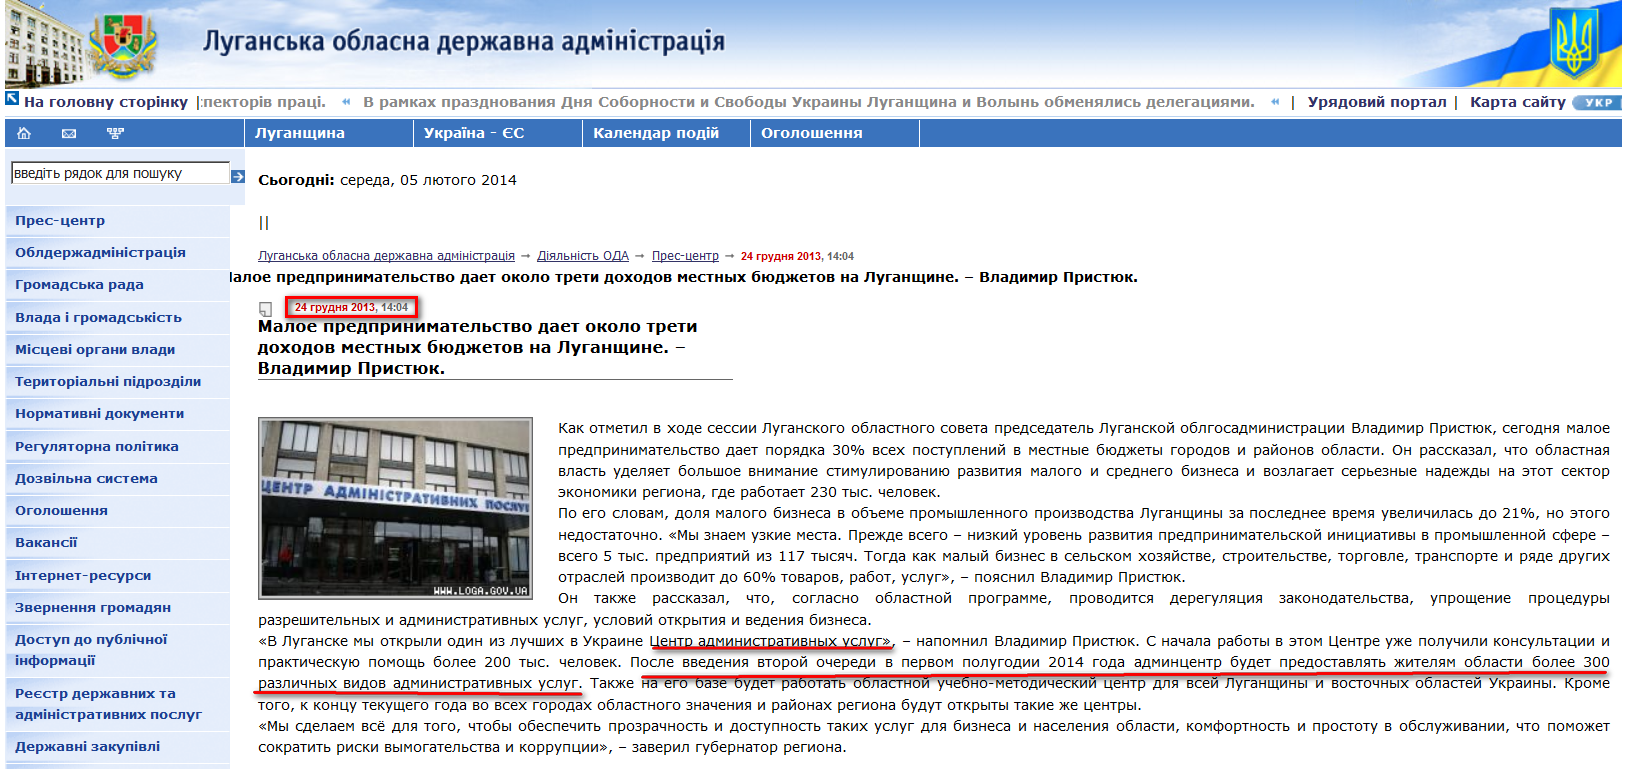 http://www.loga.gov.ua/oda/press/news/2013/12/24/news_62114.html